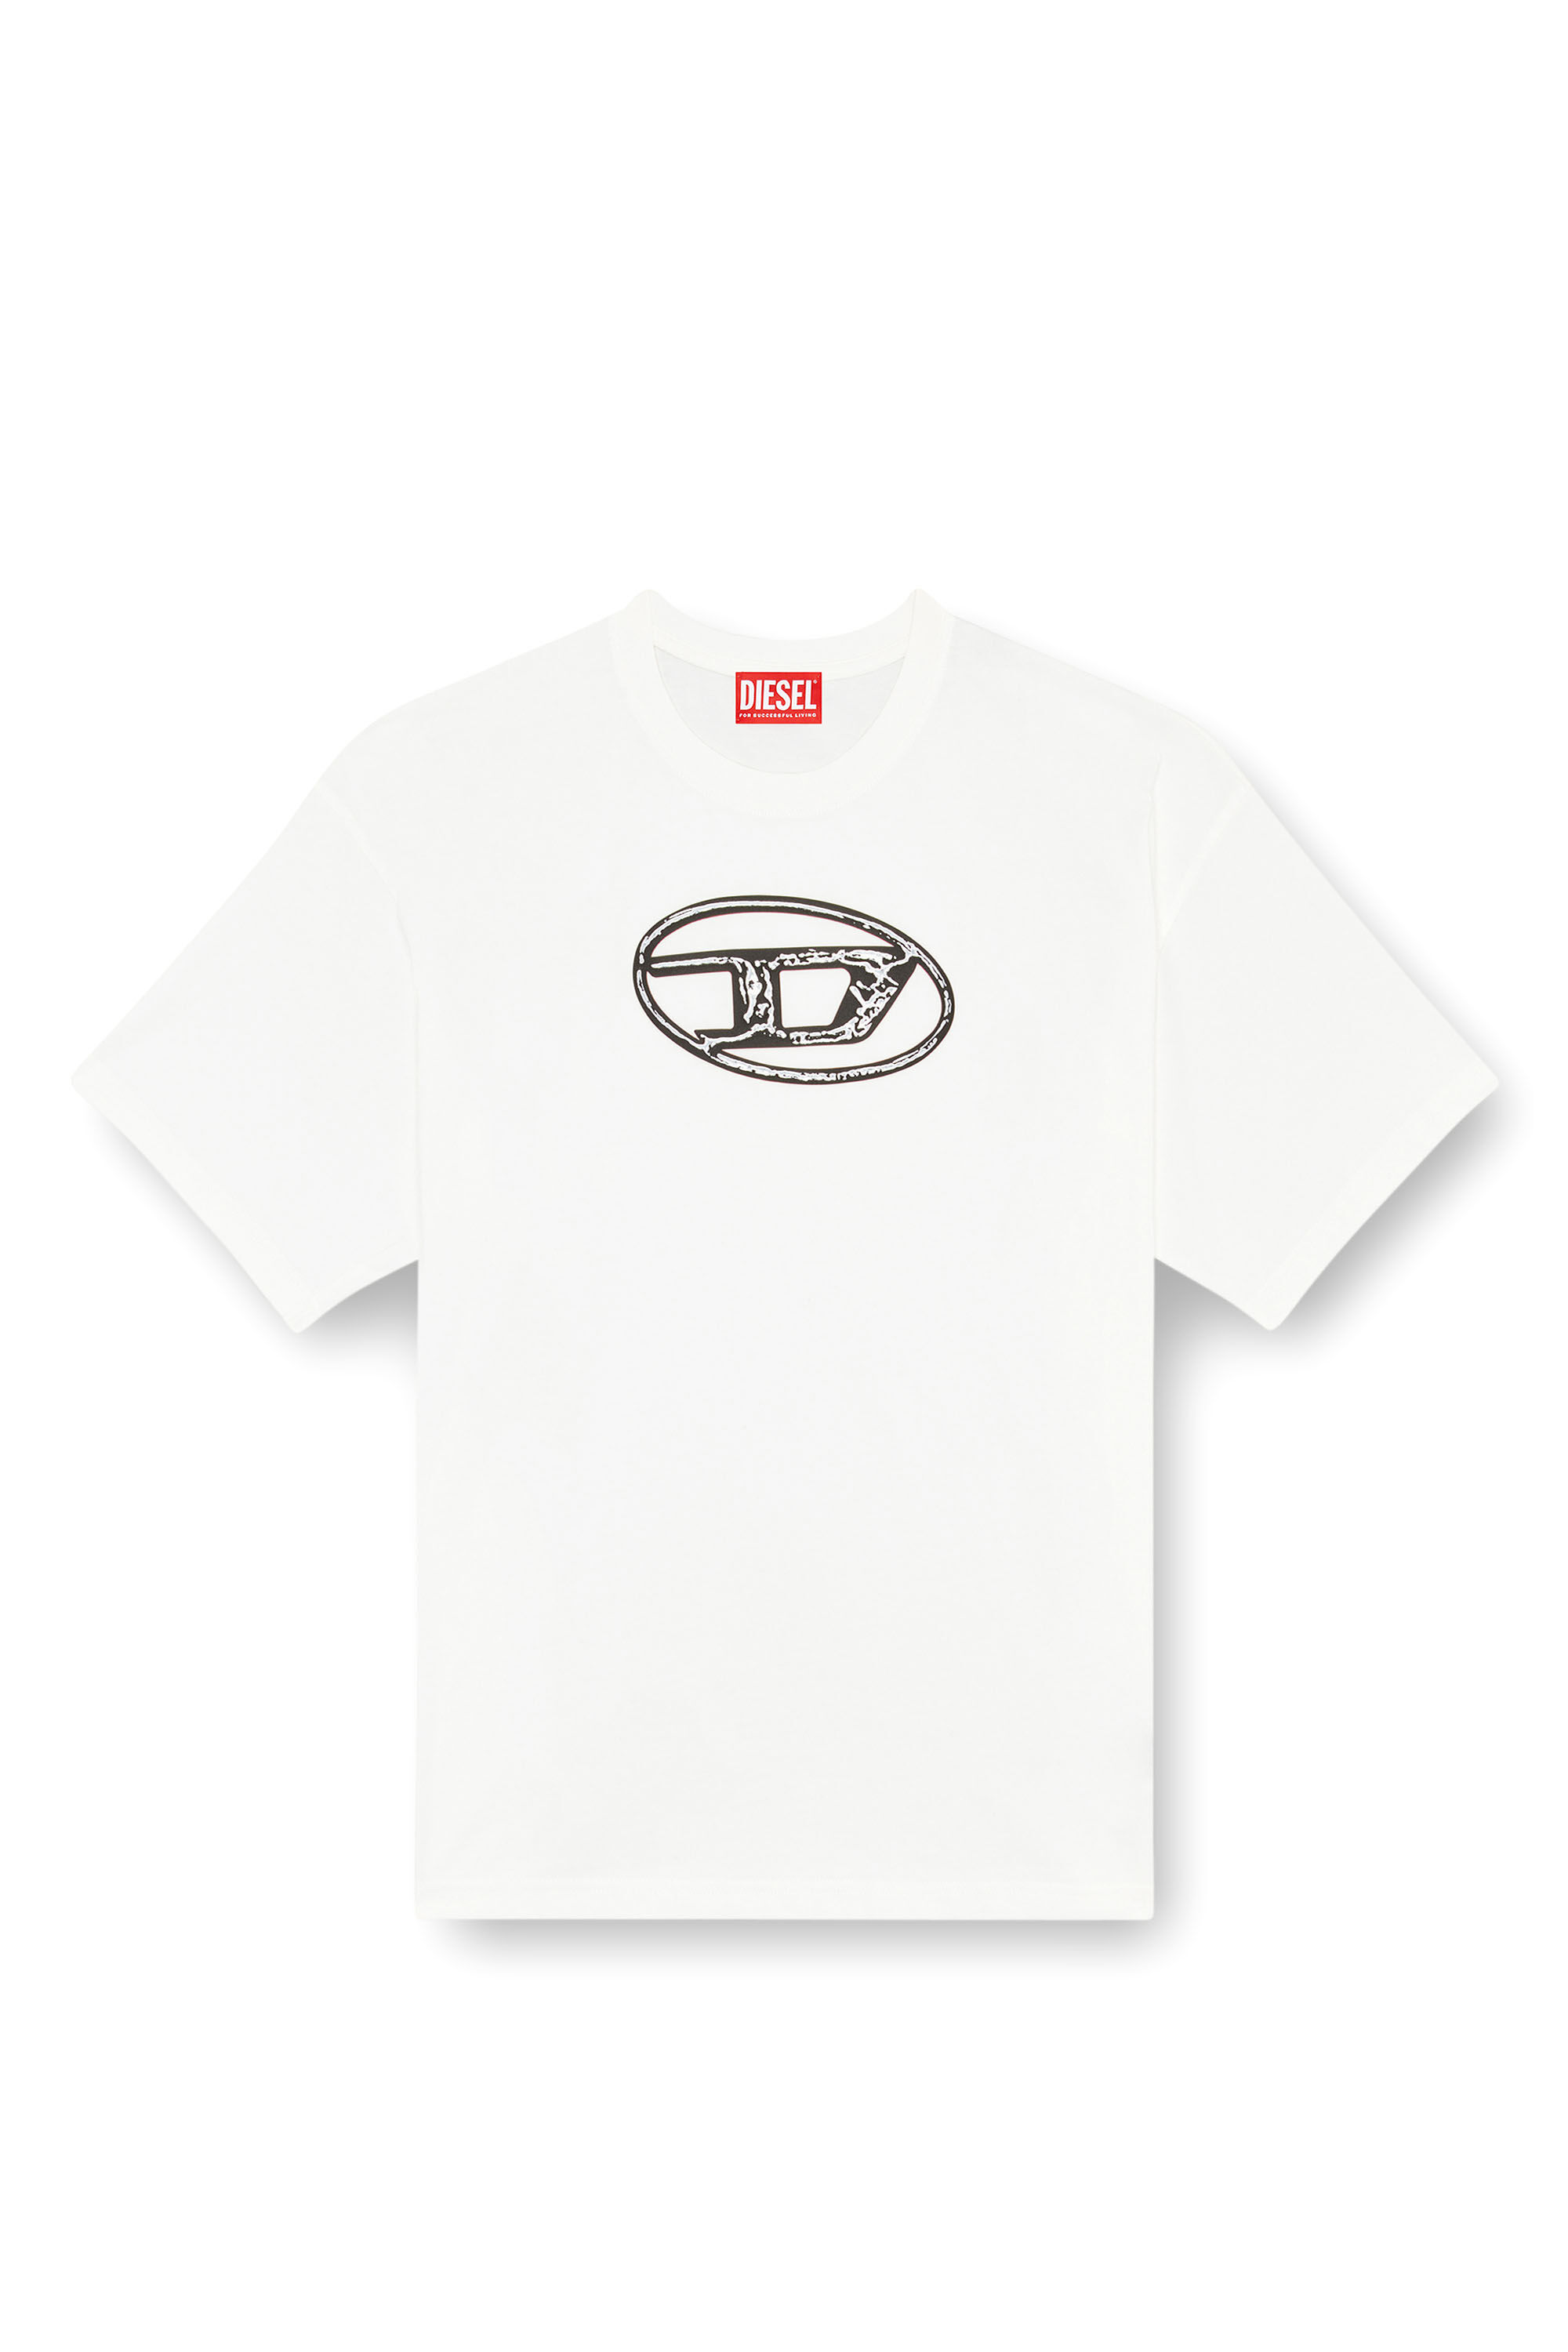 Diesel - T-BOXT-Q22, Herren Verblasstes T-Shirt mit Oval D-Print in Weiss - Image 2